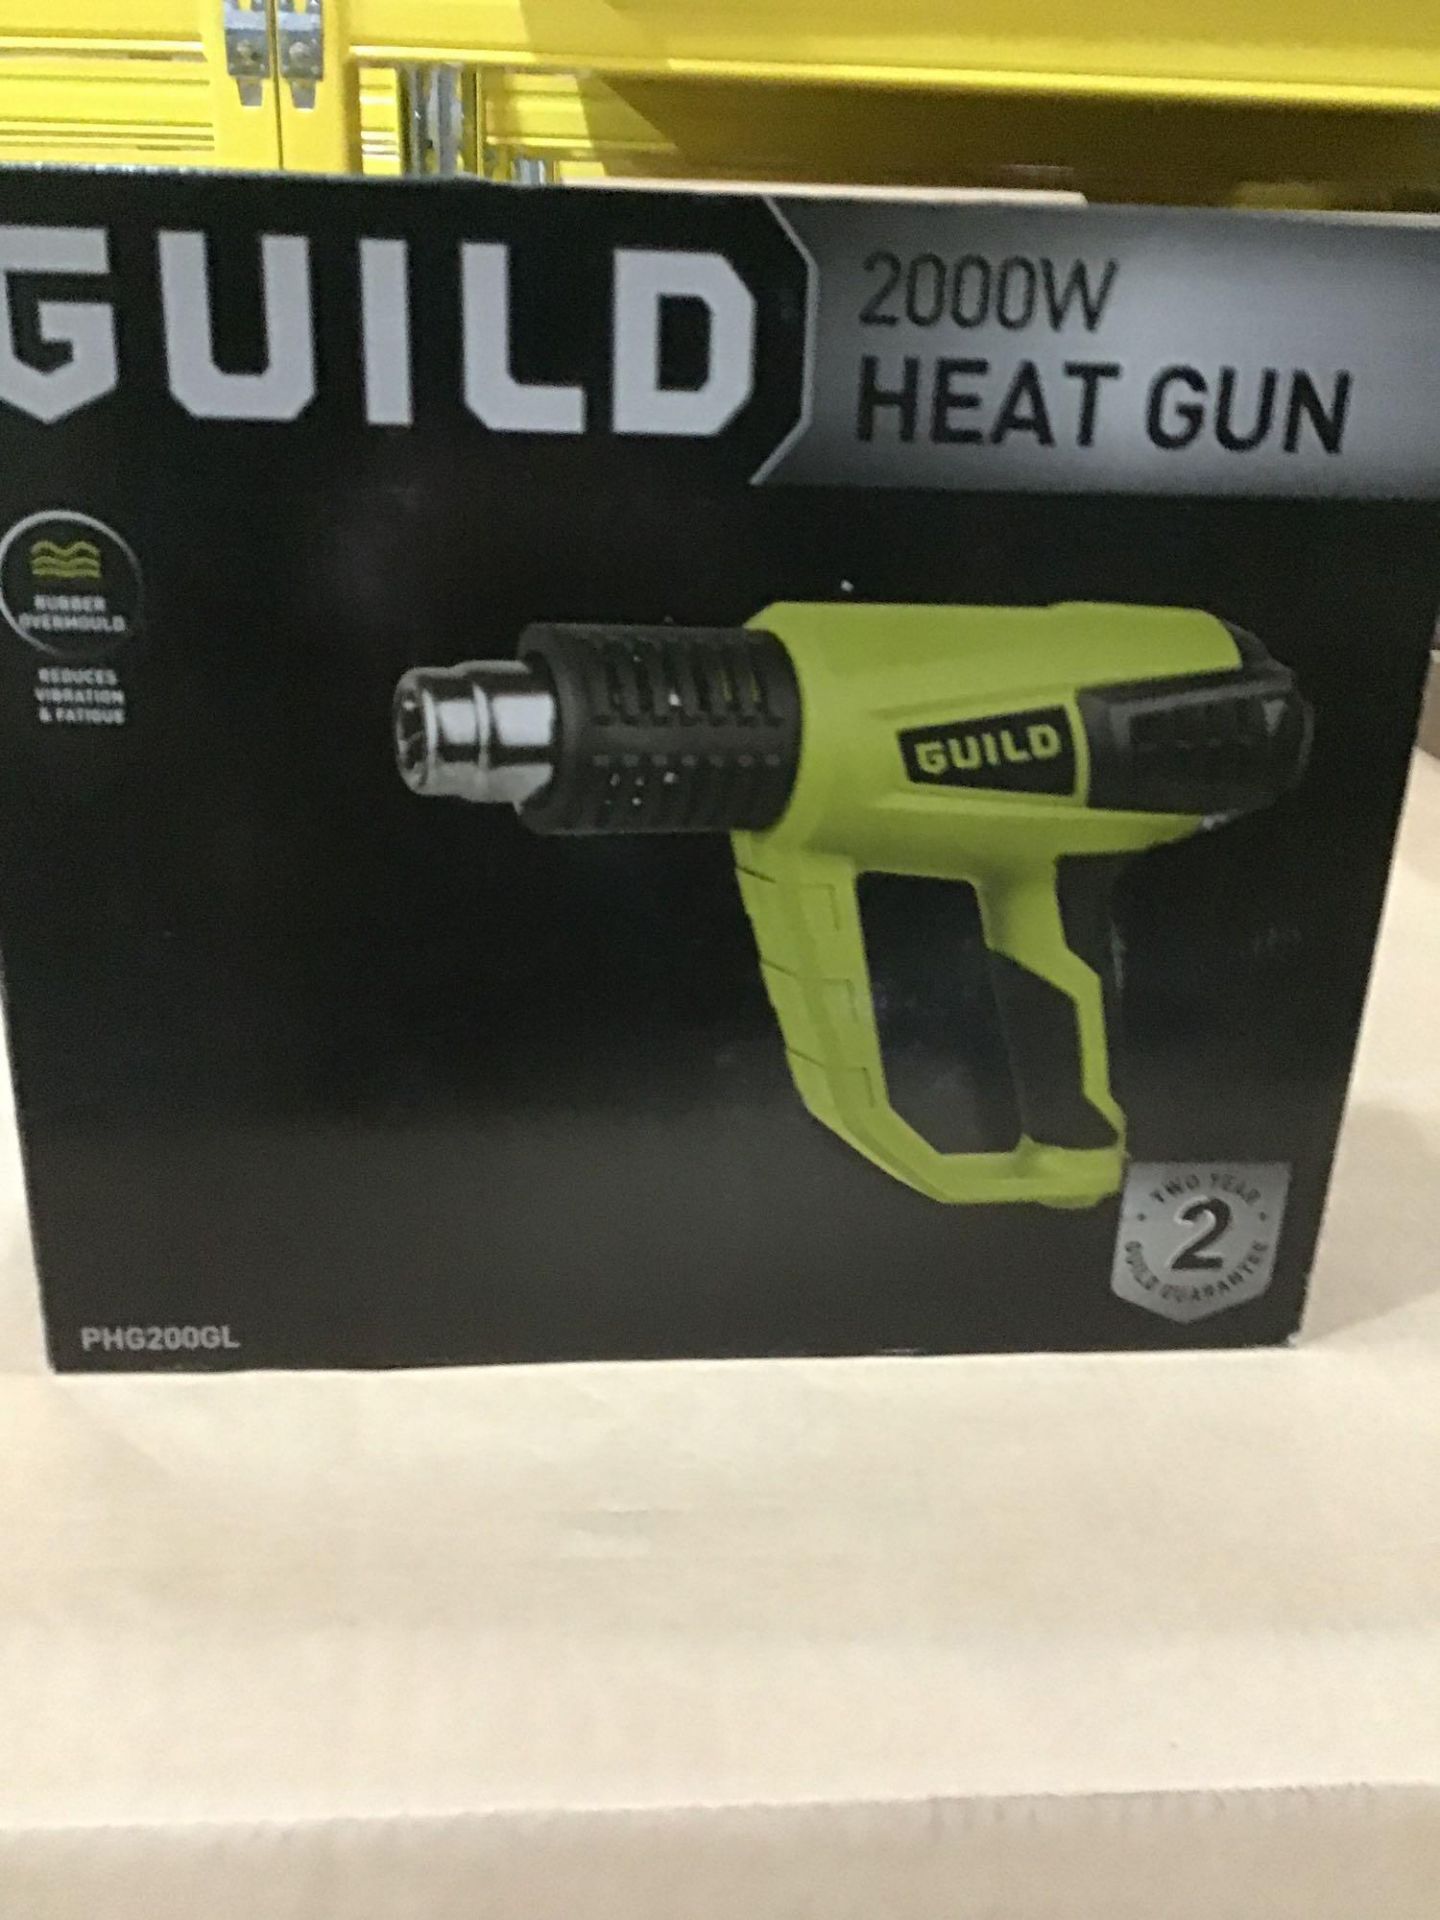 Guild Heat Gun - 2000W PHG200GL £20.00 RRP - Image 3 of 6